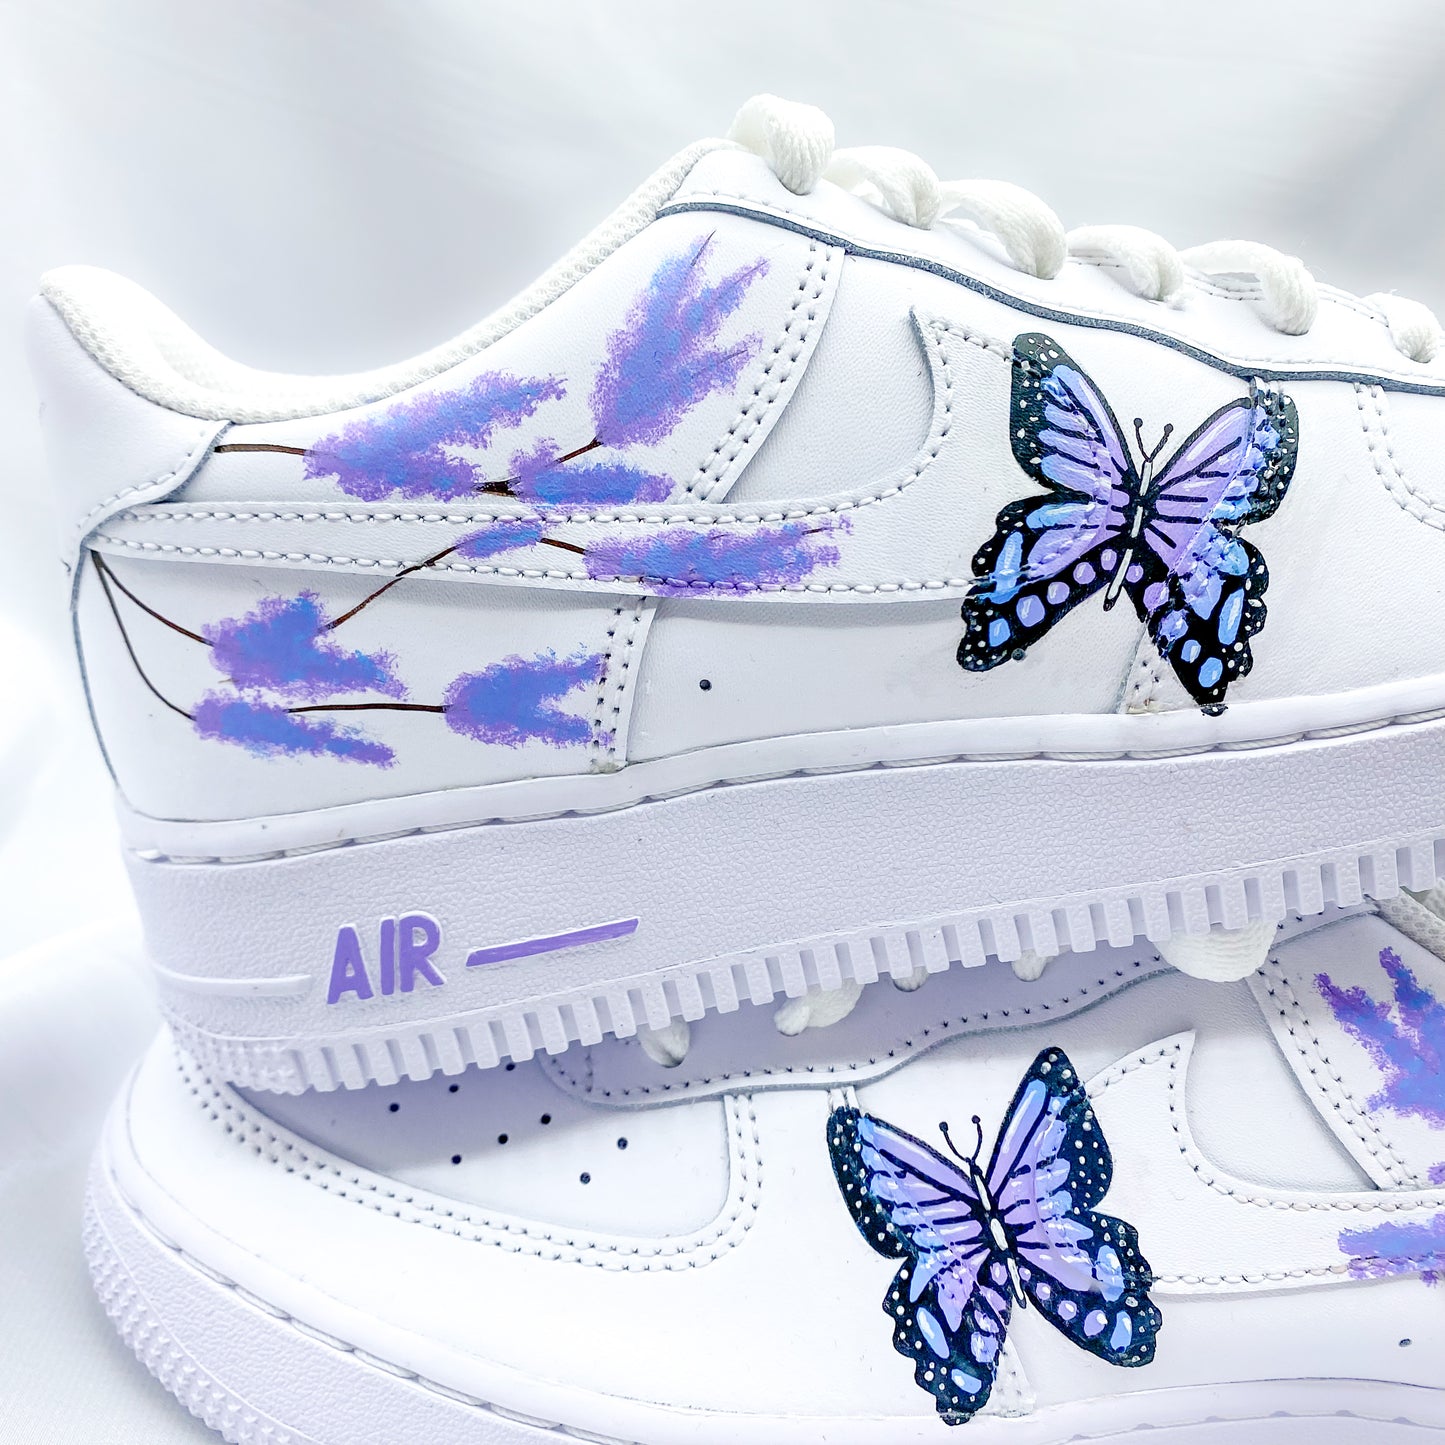 Custom Nike Air Force 1 Schmetterling